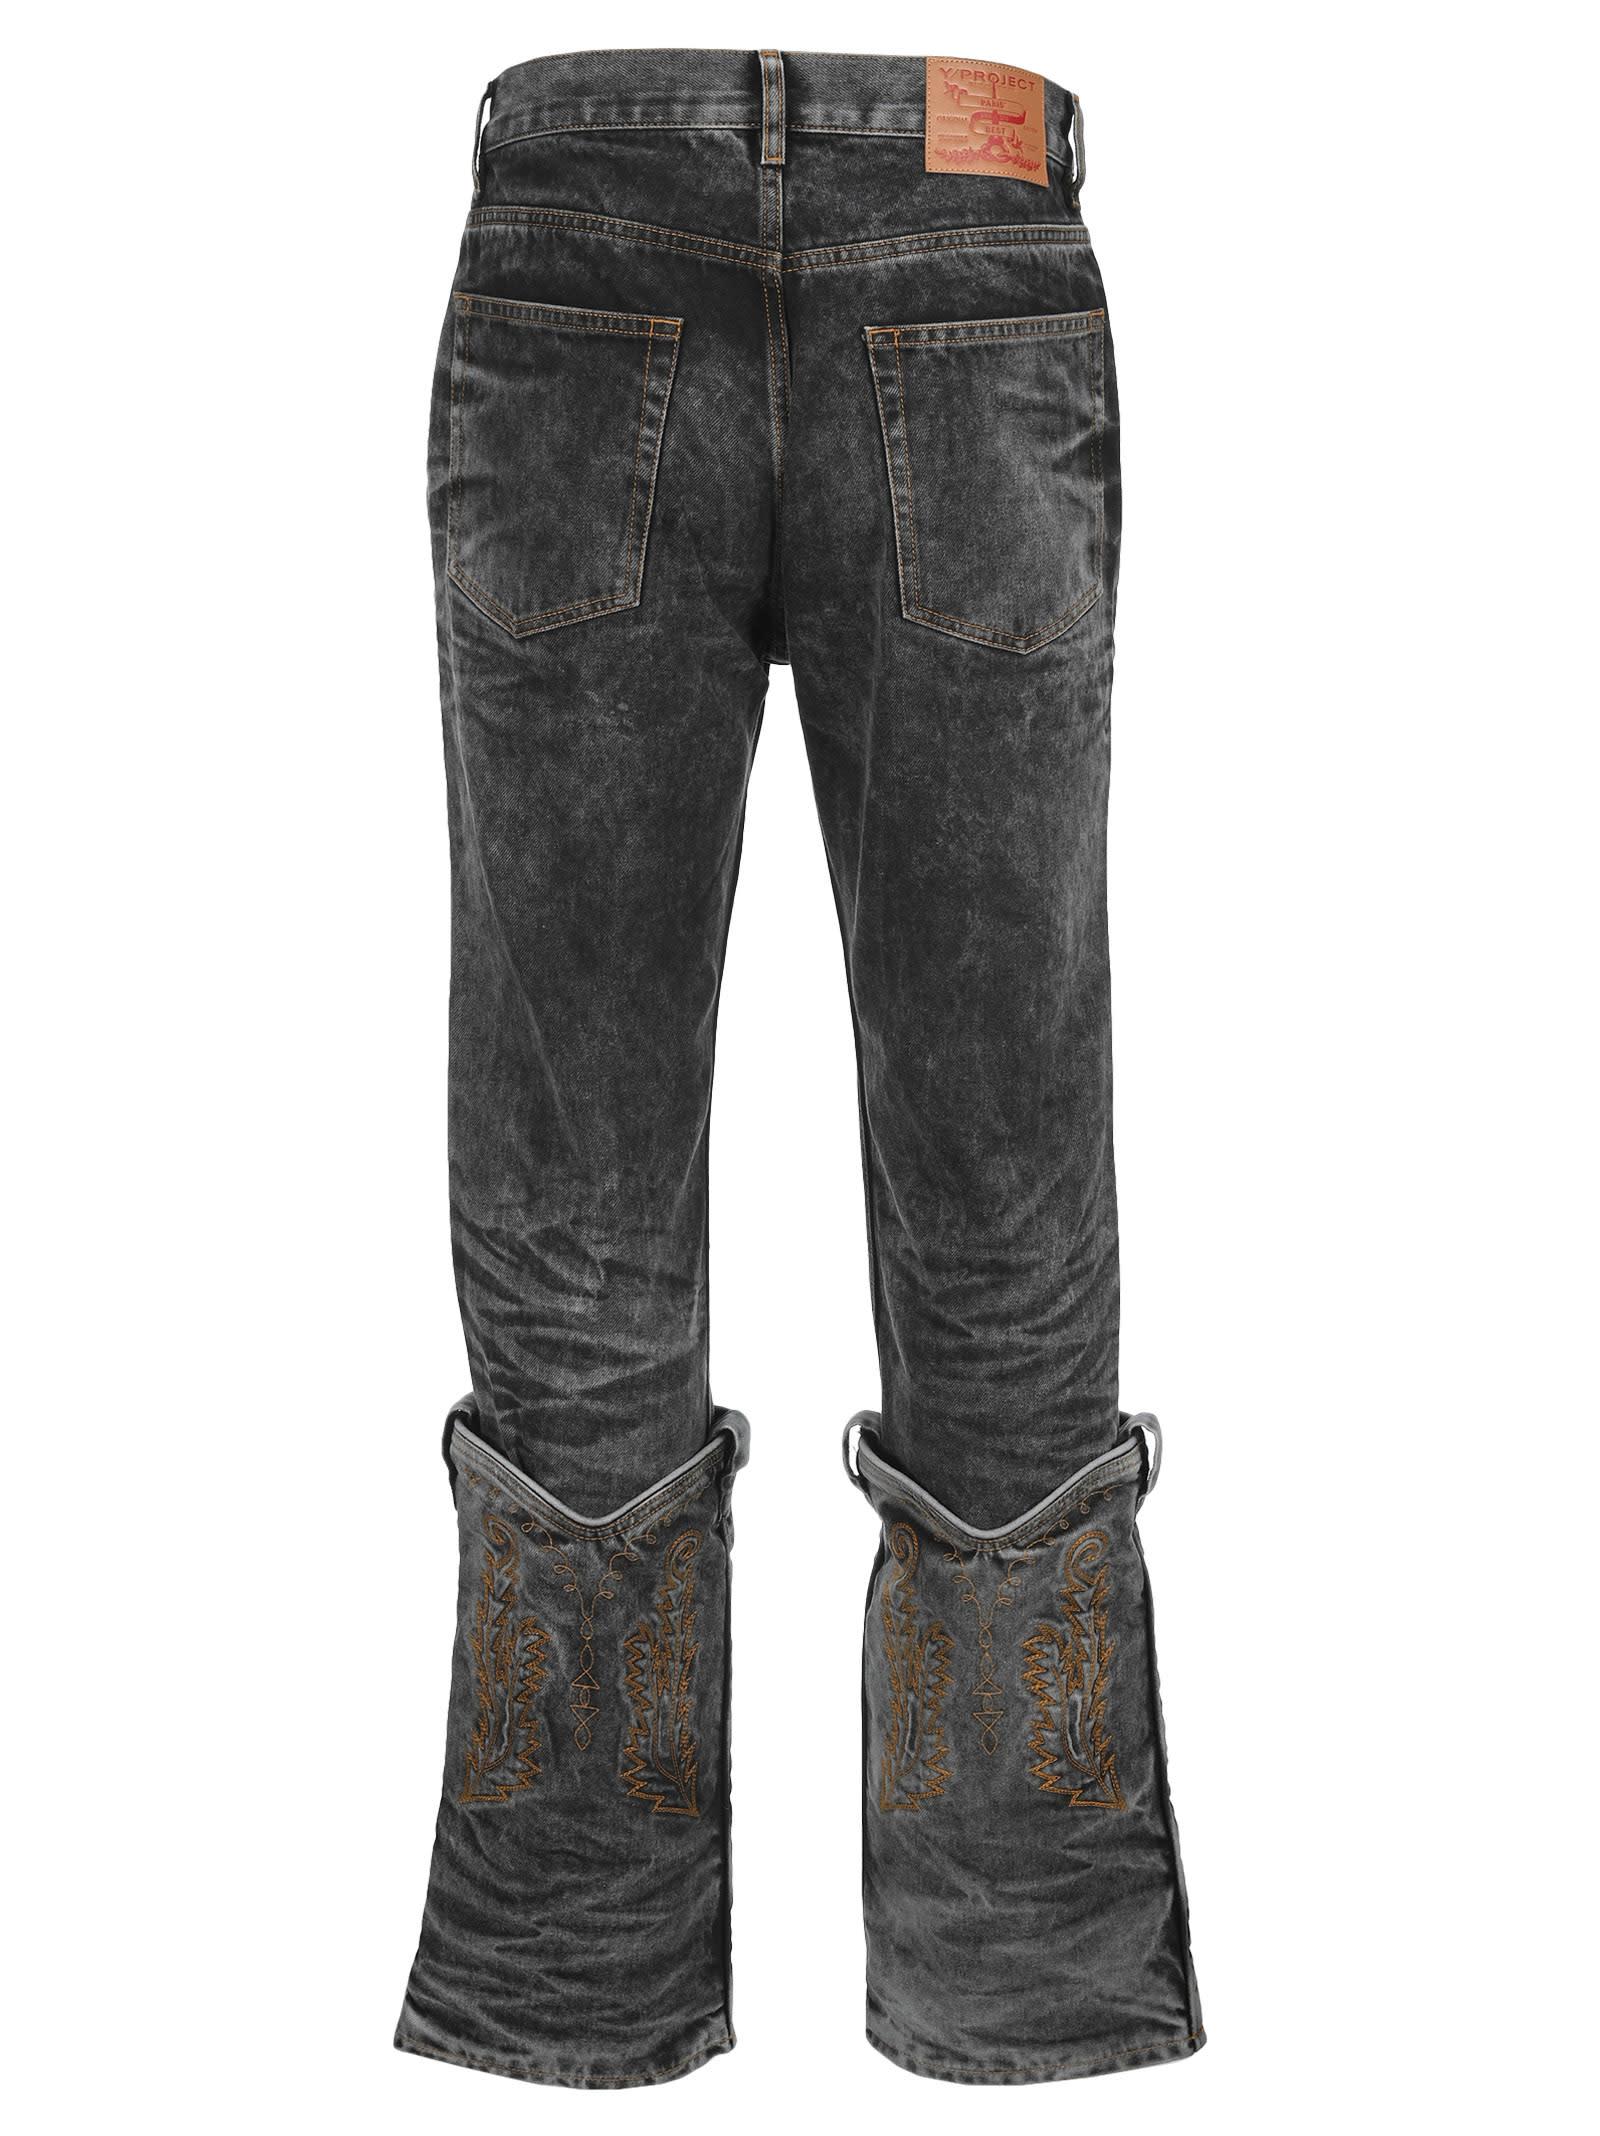 Y. Project Denim Cowboy Cuff Jeans in Black Acid Washed (Black) for Men |  Lyst